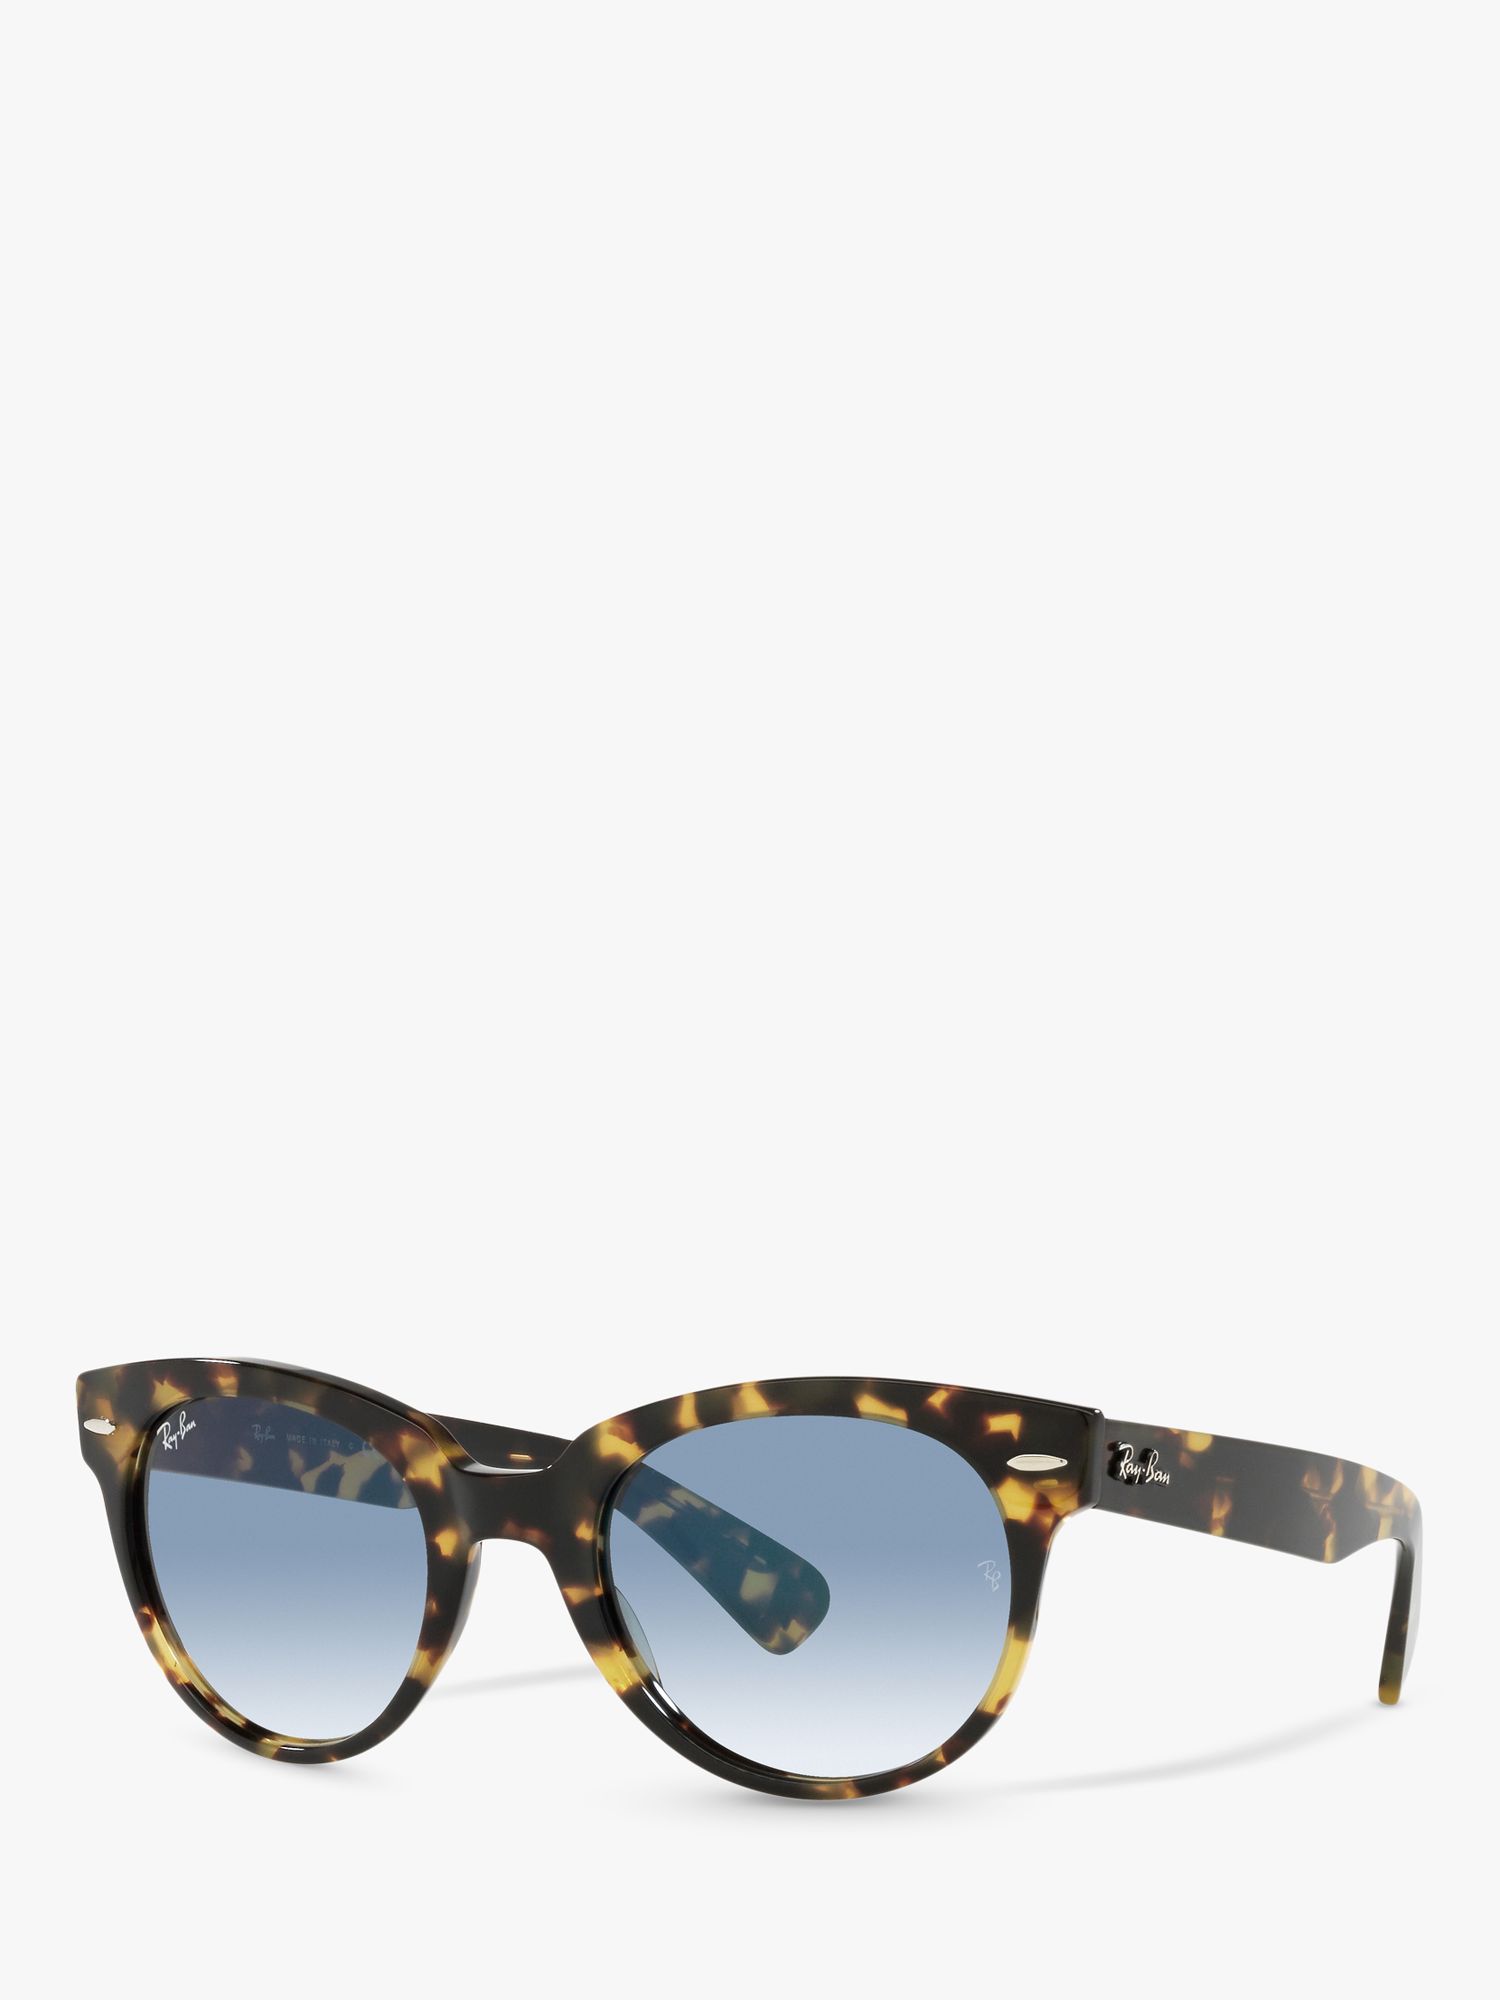 Women's Sunglasses - Ray-Ban, Cat's Eye | John Lewis & Partners